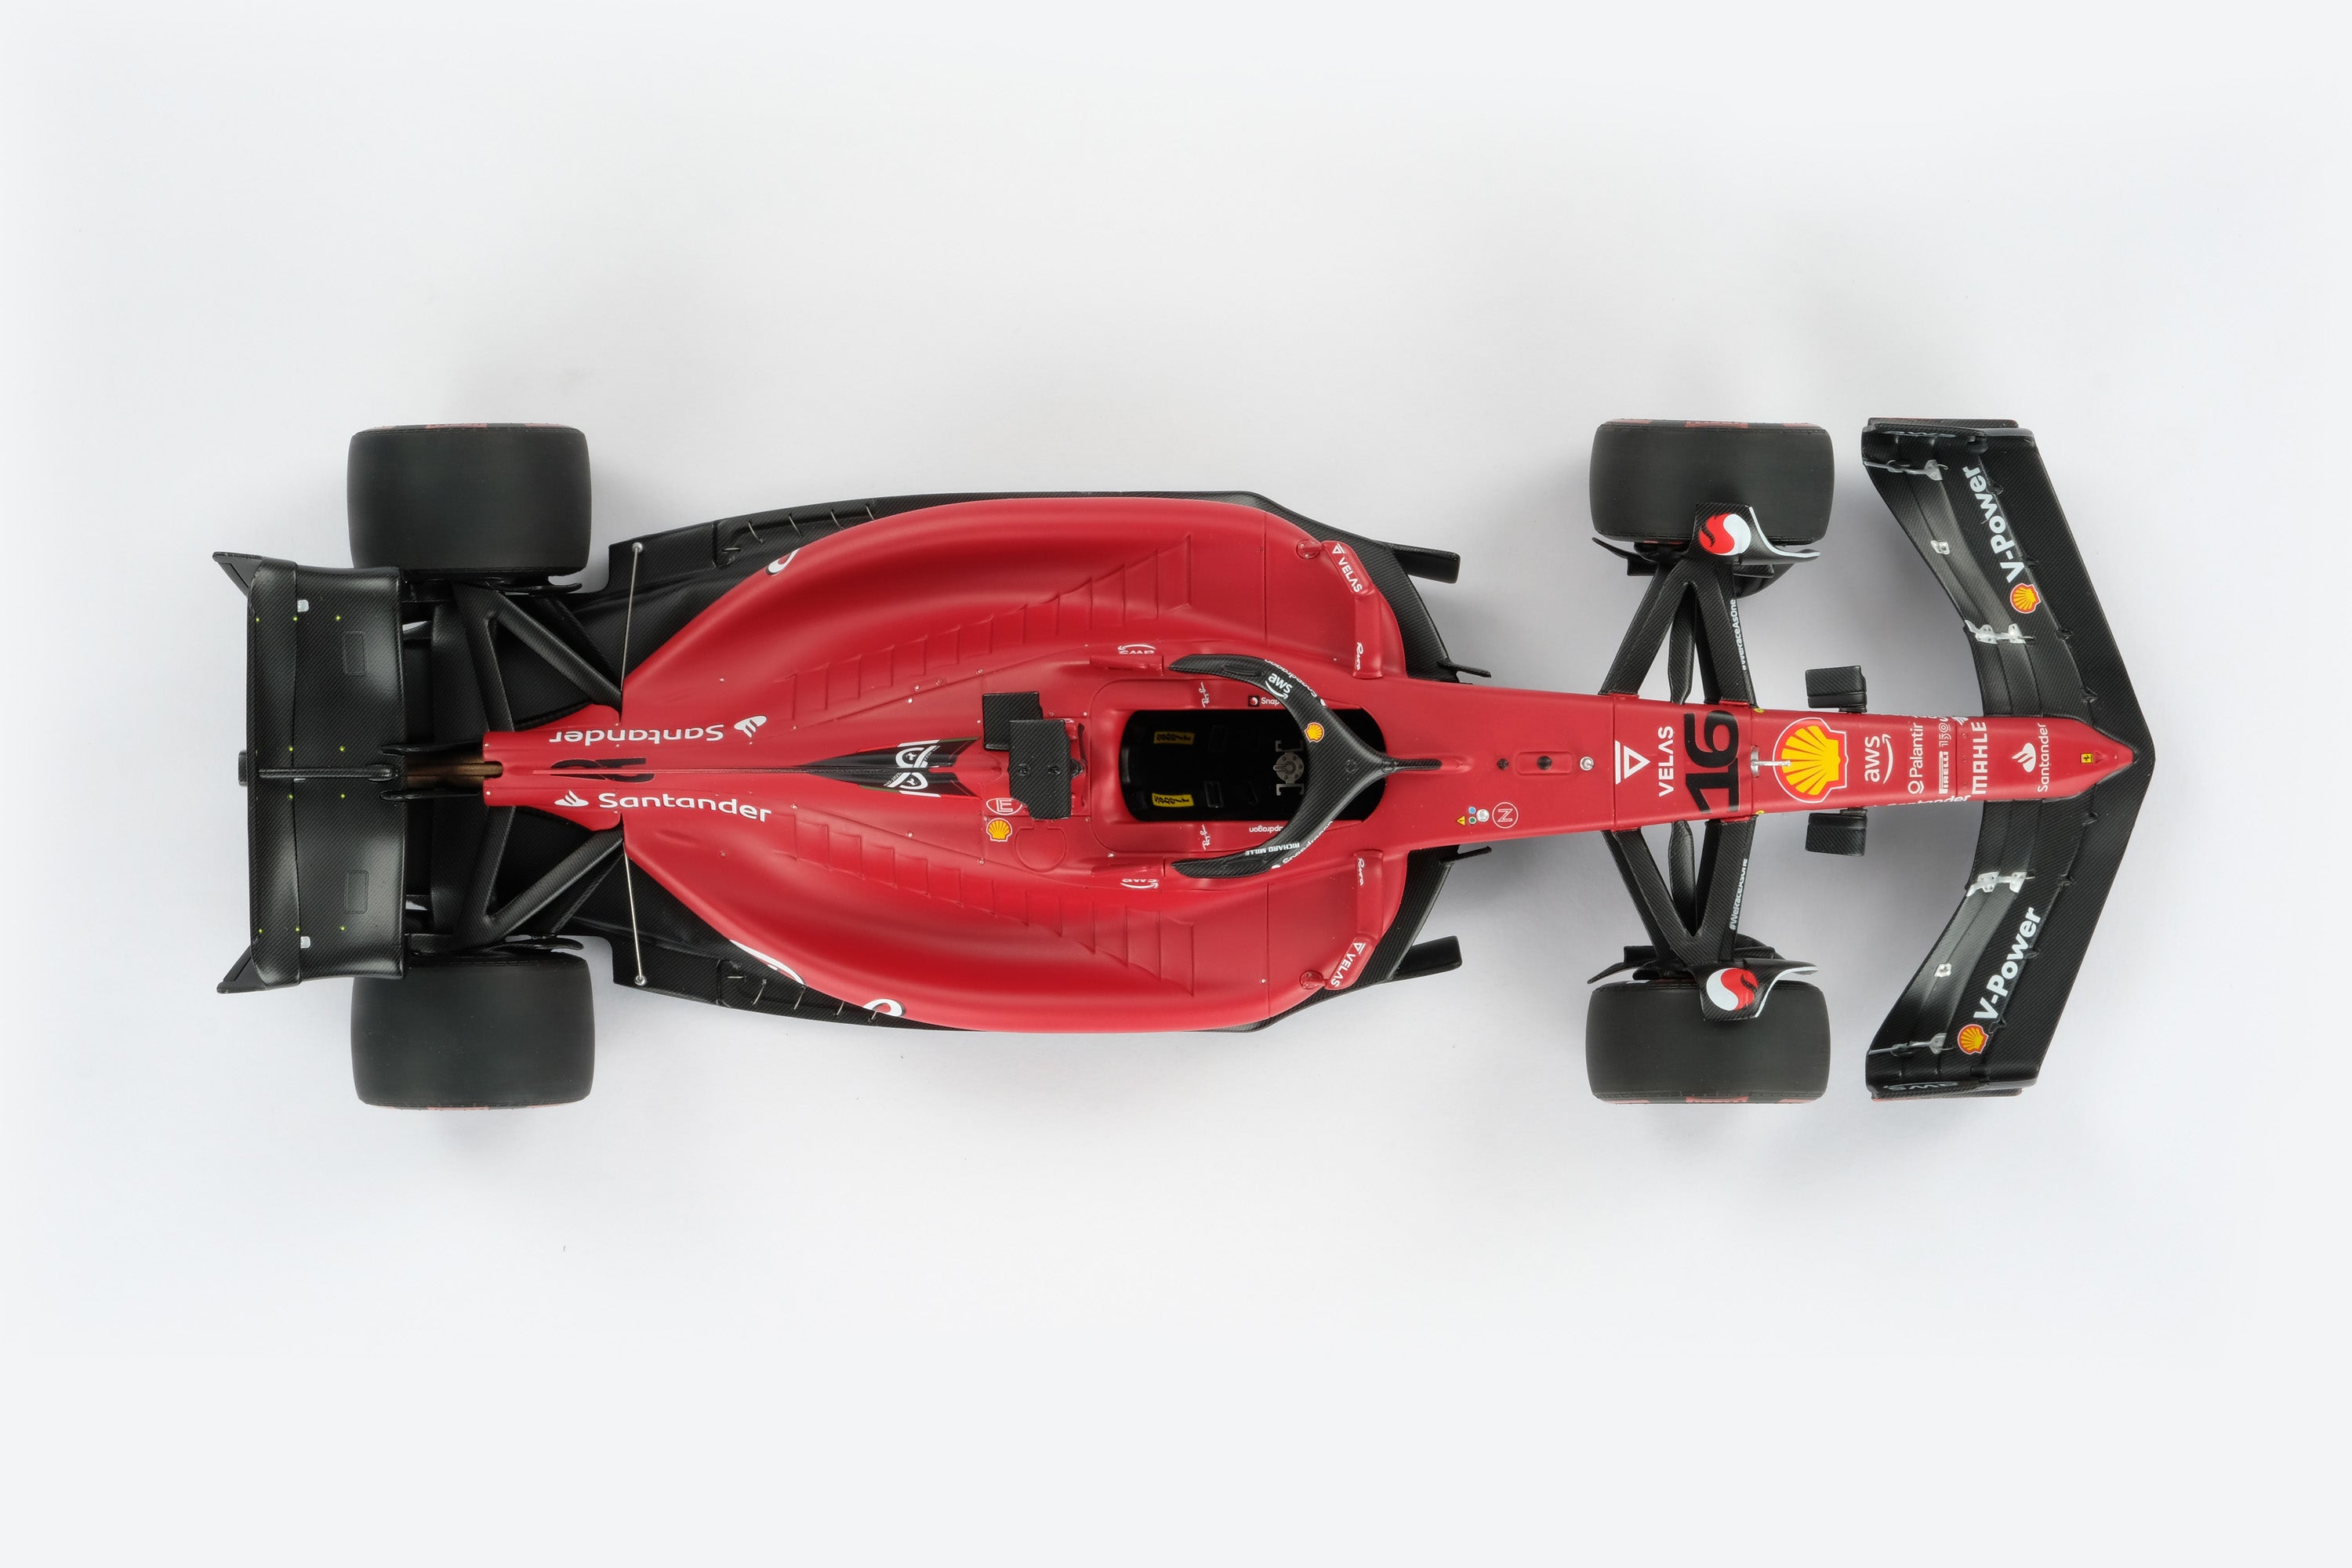 Ferrari F1-75 #16 Ferrari Racing F1 World Championship (2022